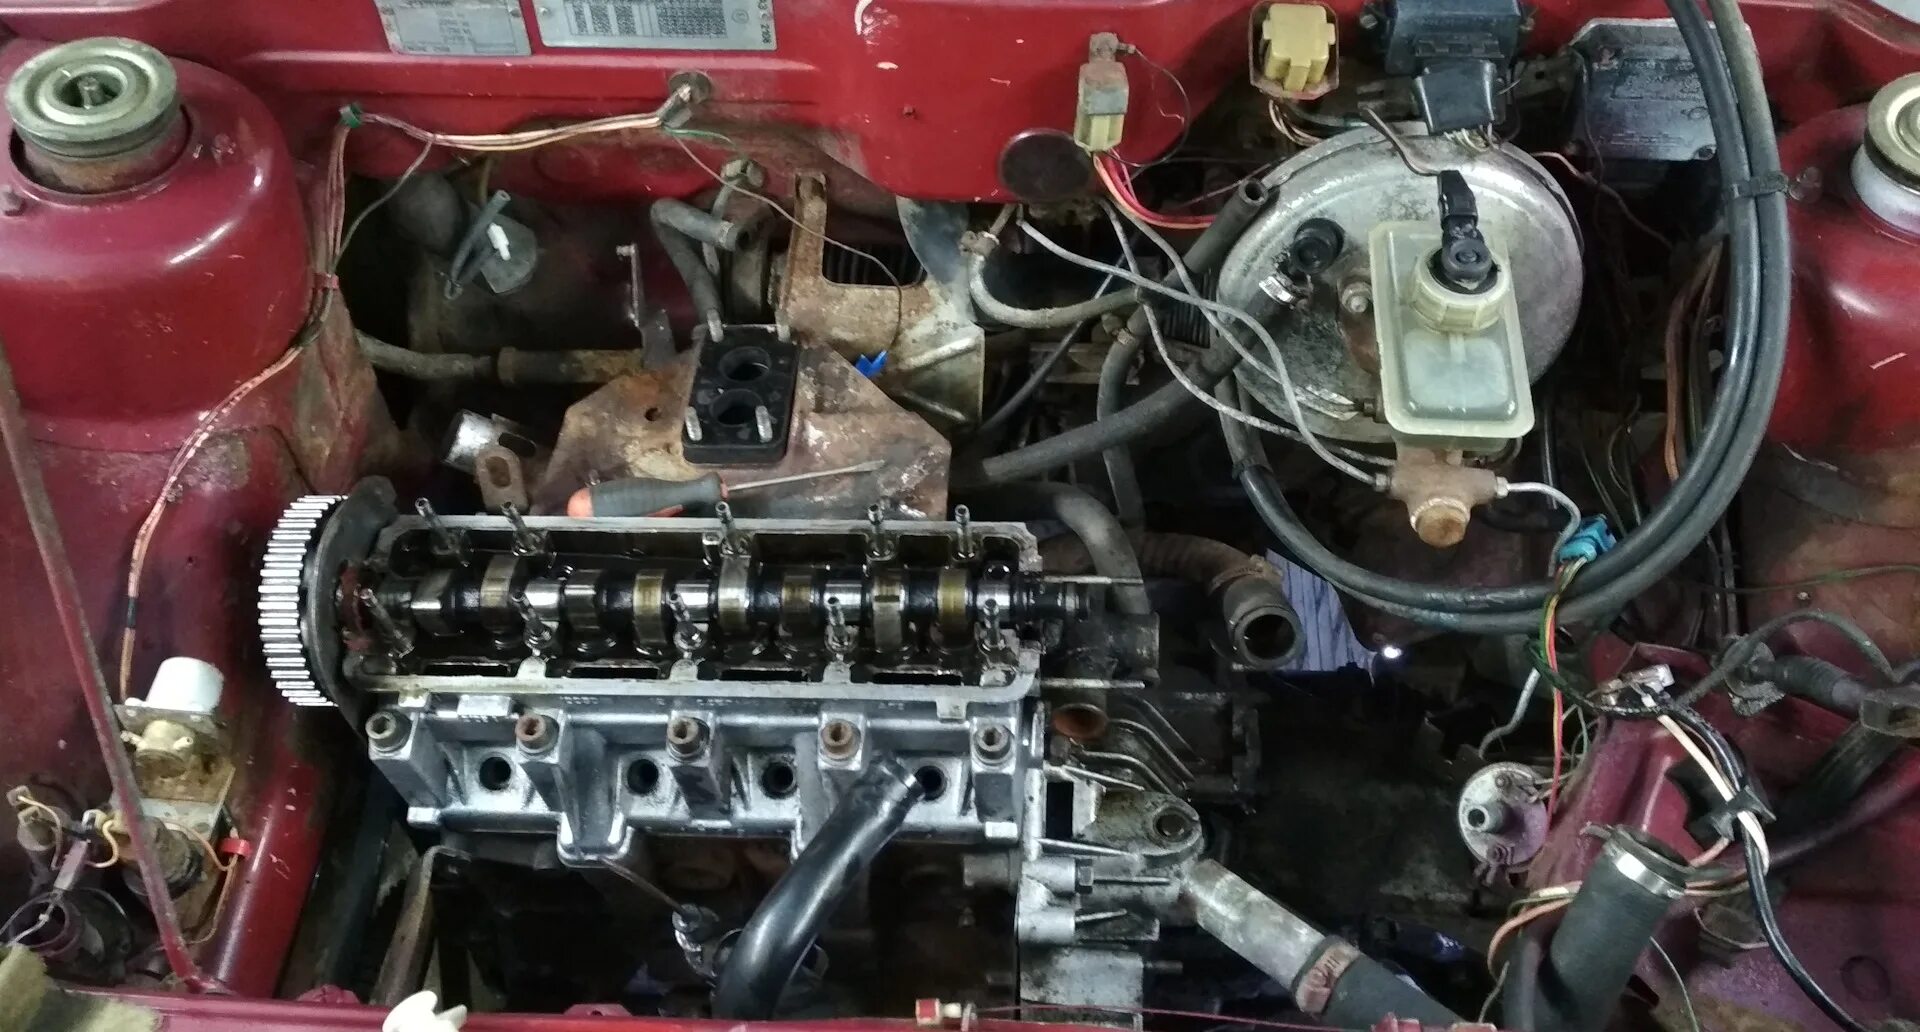 Двигатель 2108 карбюратор. ВАЗ 2108 двигатель 1.3. Двигатель ВАЗ 2108 карбюратор. Двигатель 2108 1.3. Двигатель ВАЗ 2108.